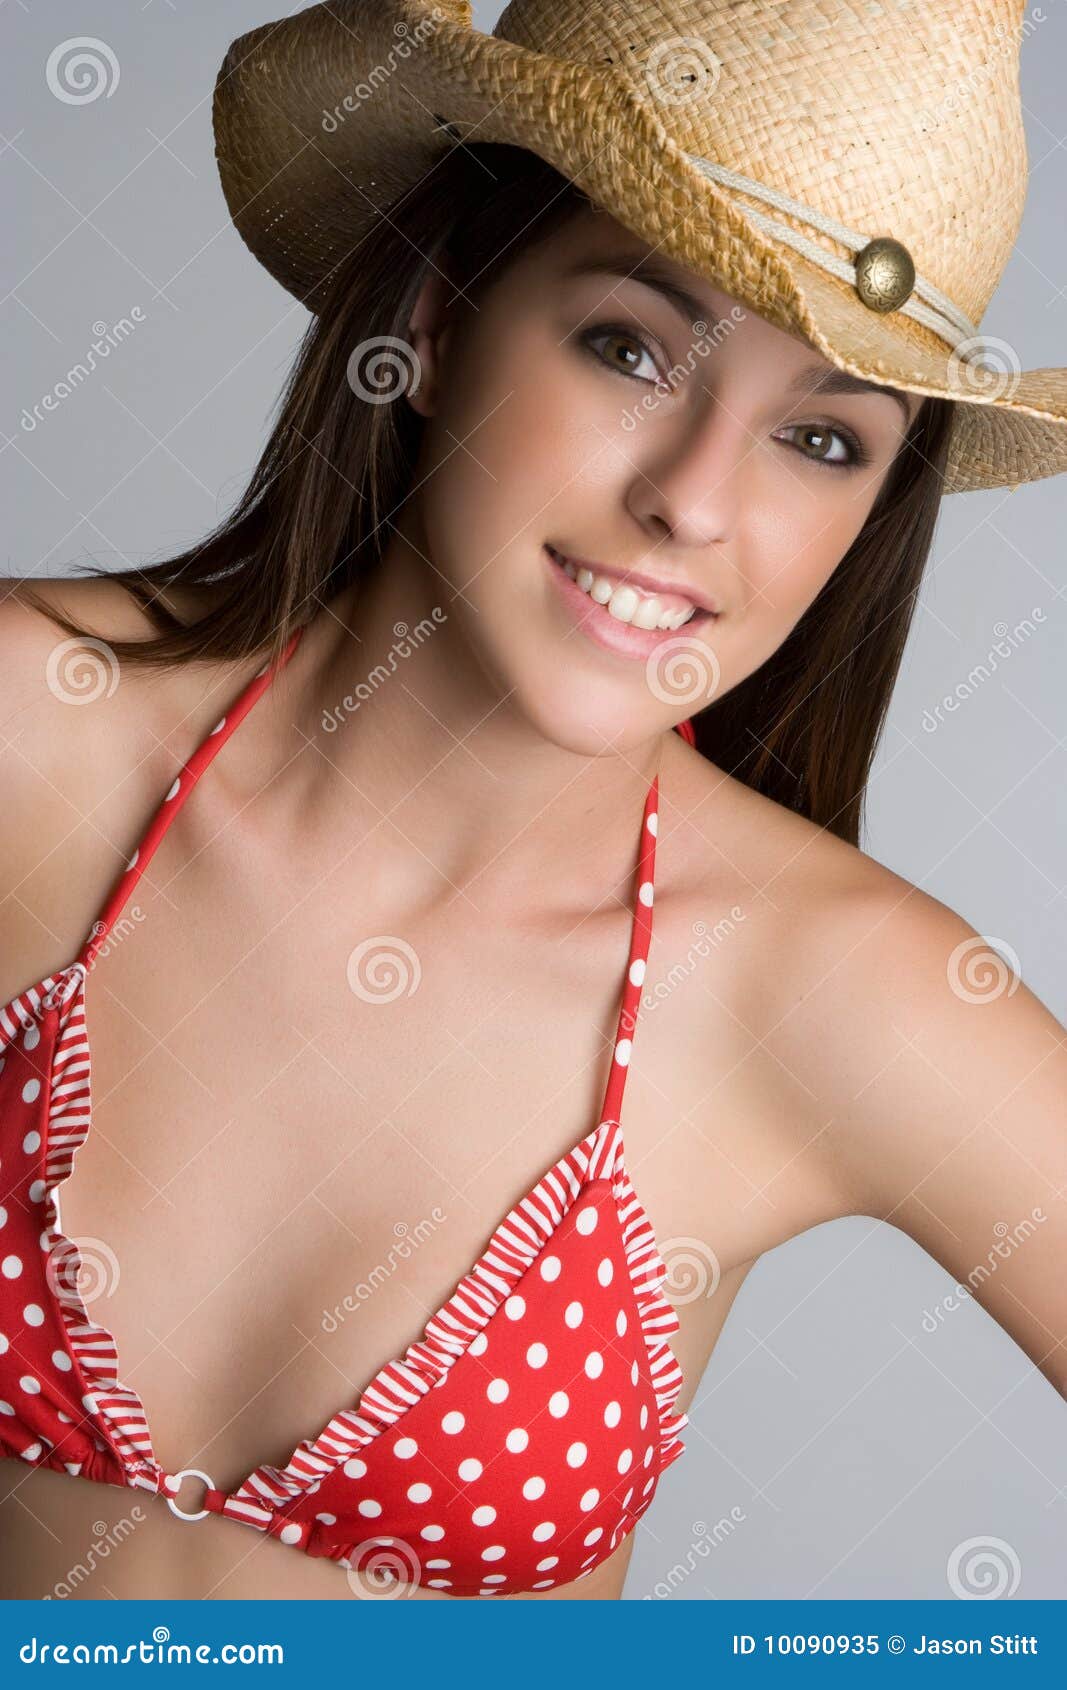 bikini models on the beach nude photo